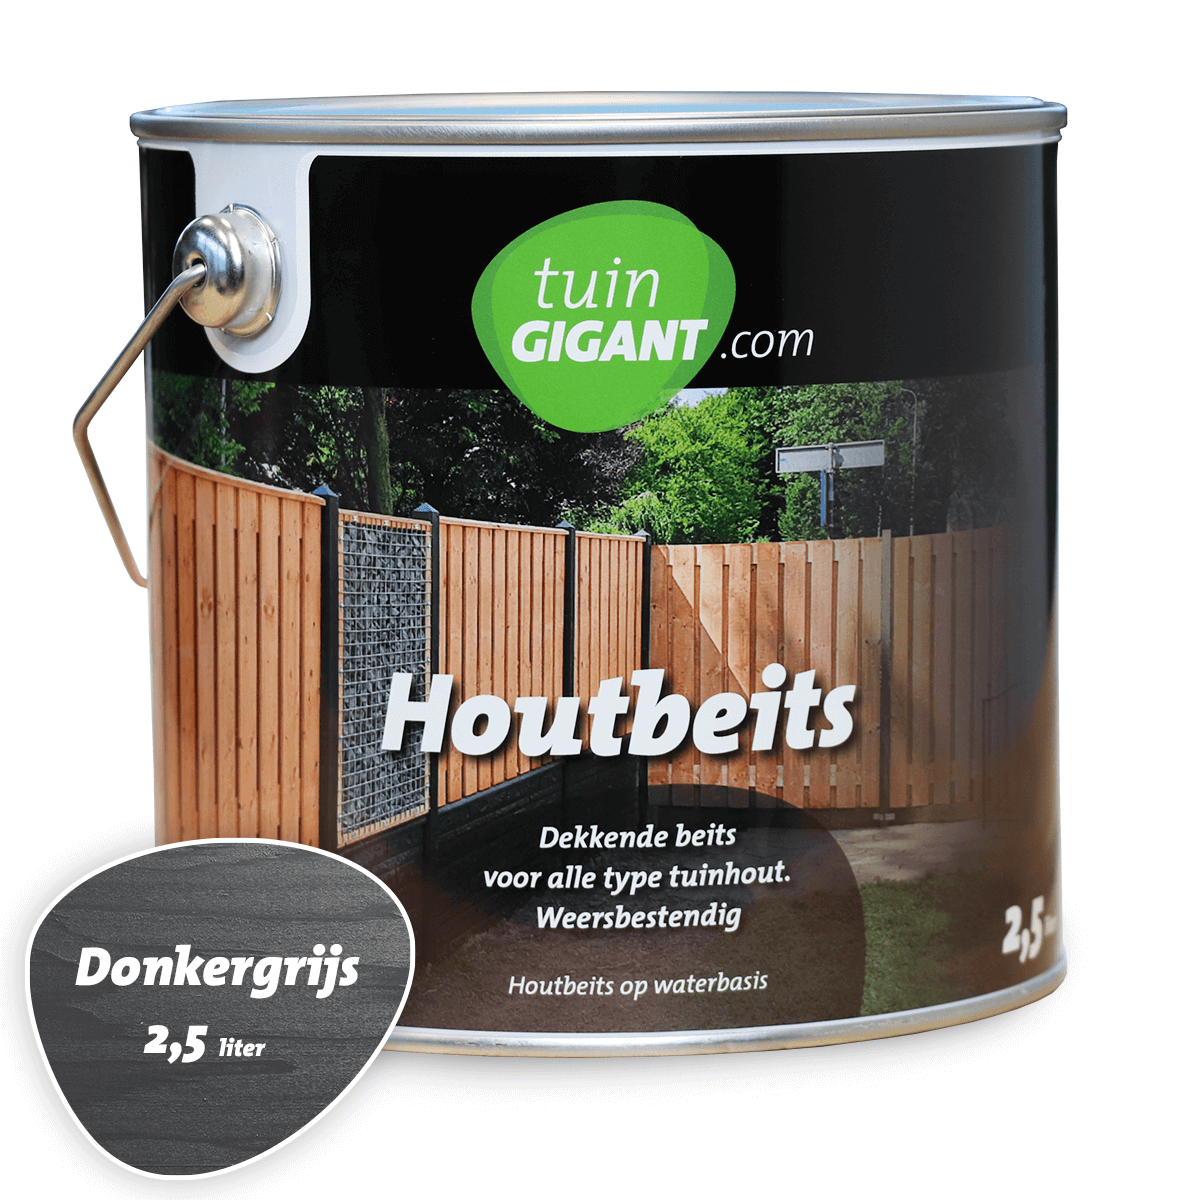 Houtbeits Donkergrijs - 1 2,5 Tuingigant.com